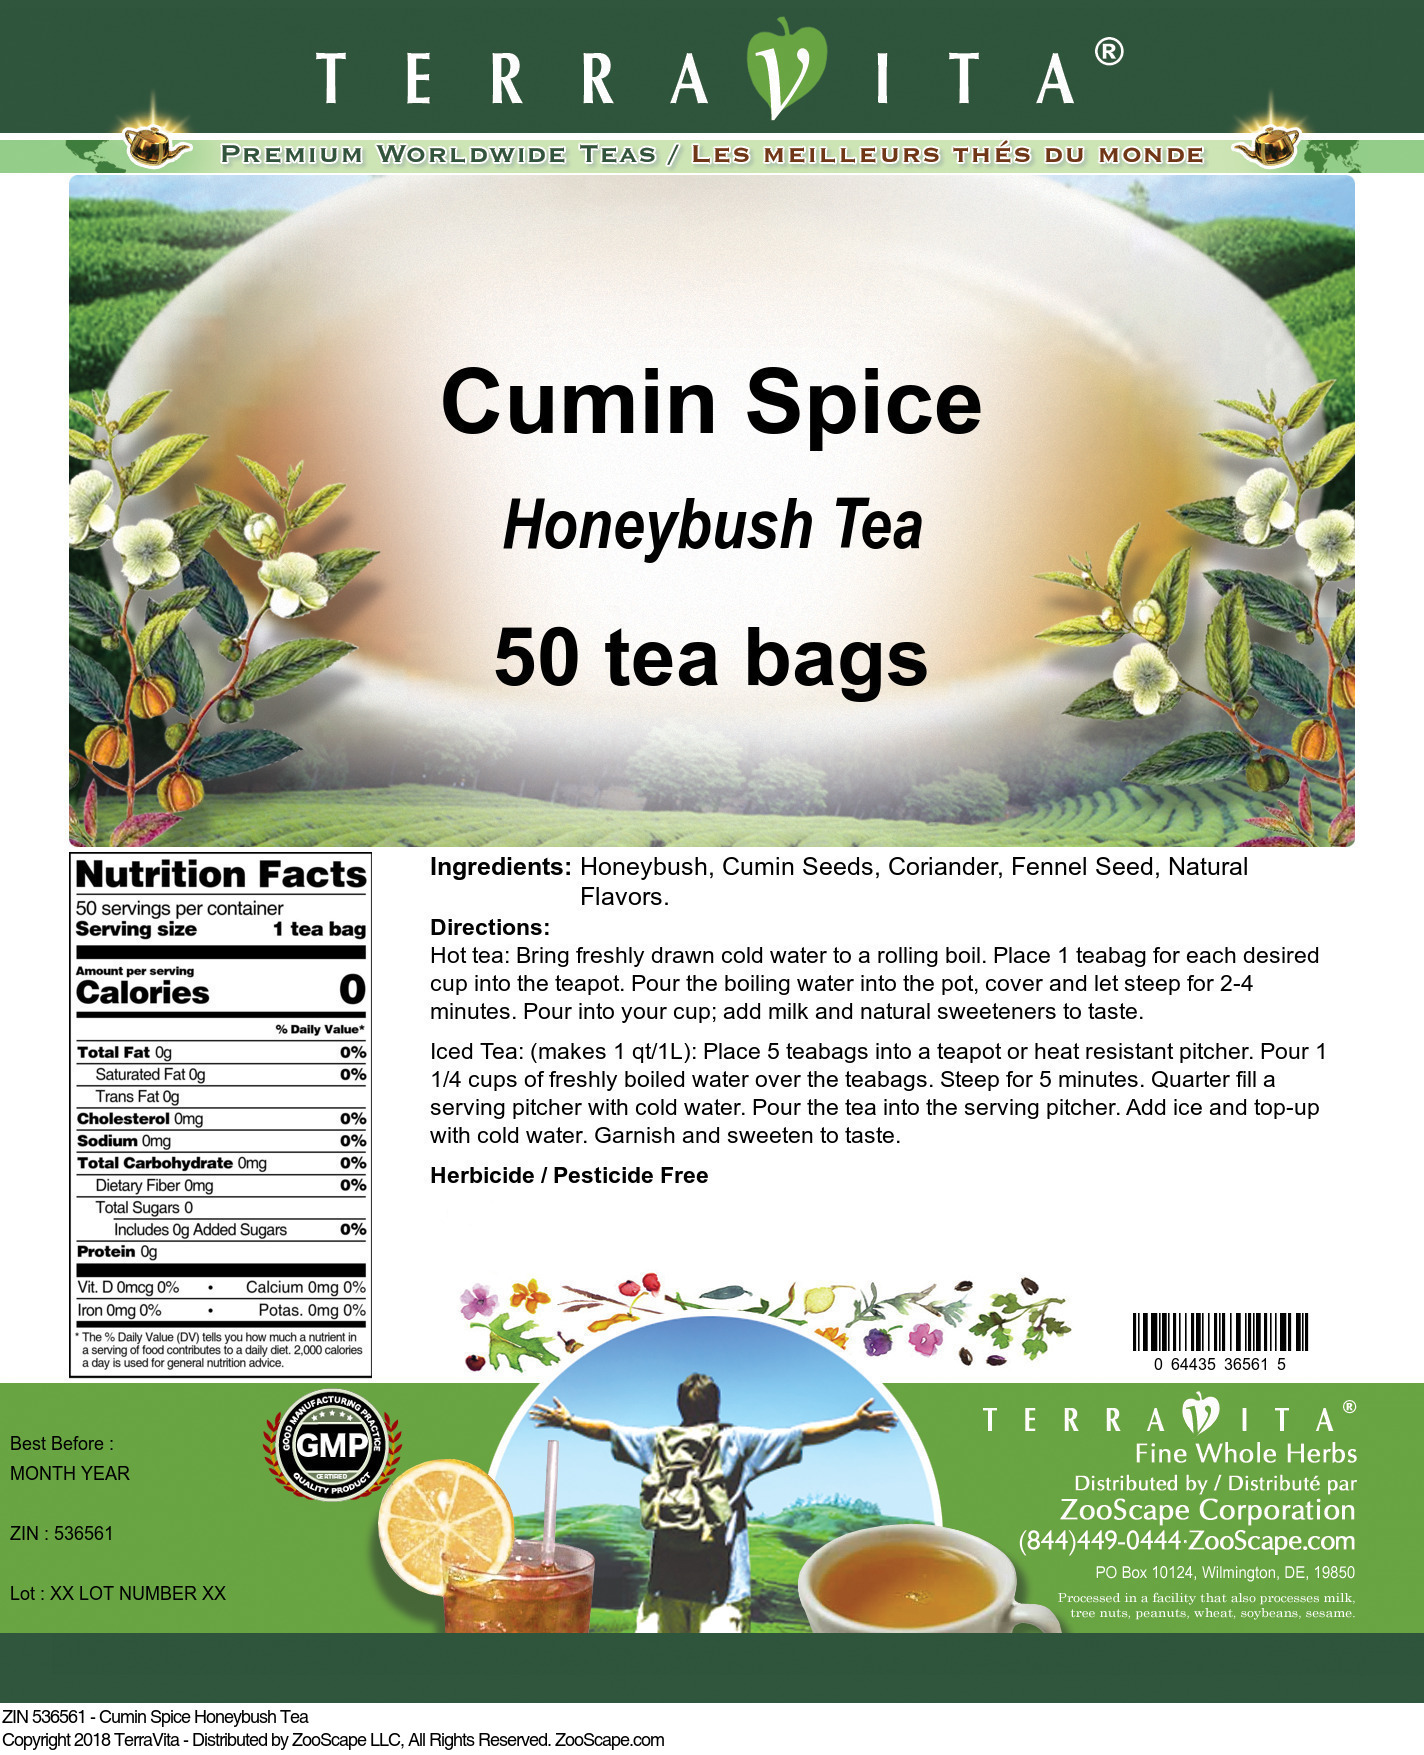 Cumin Spice Honeybush Tea - Label